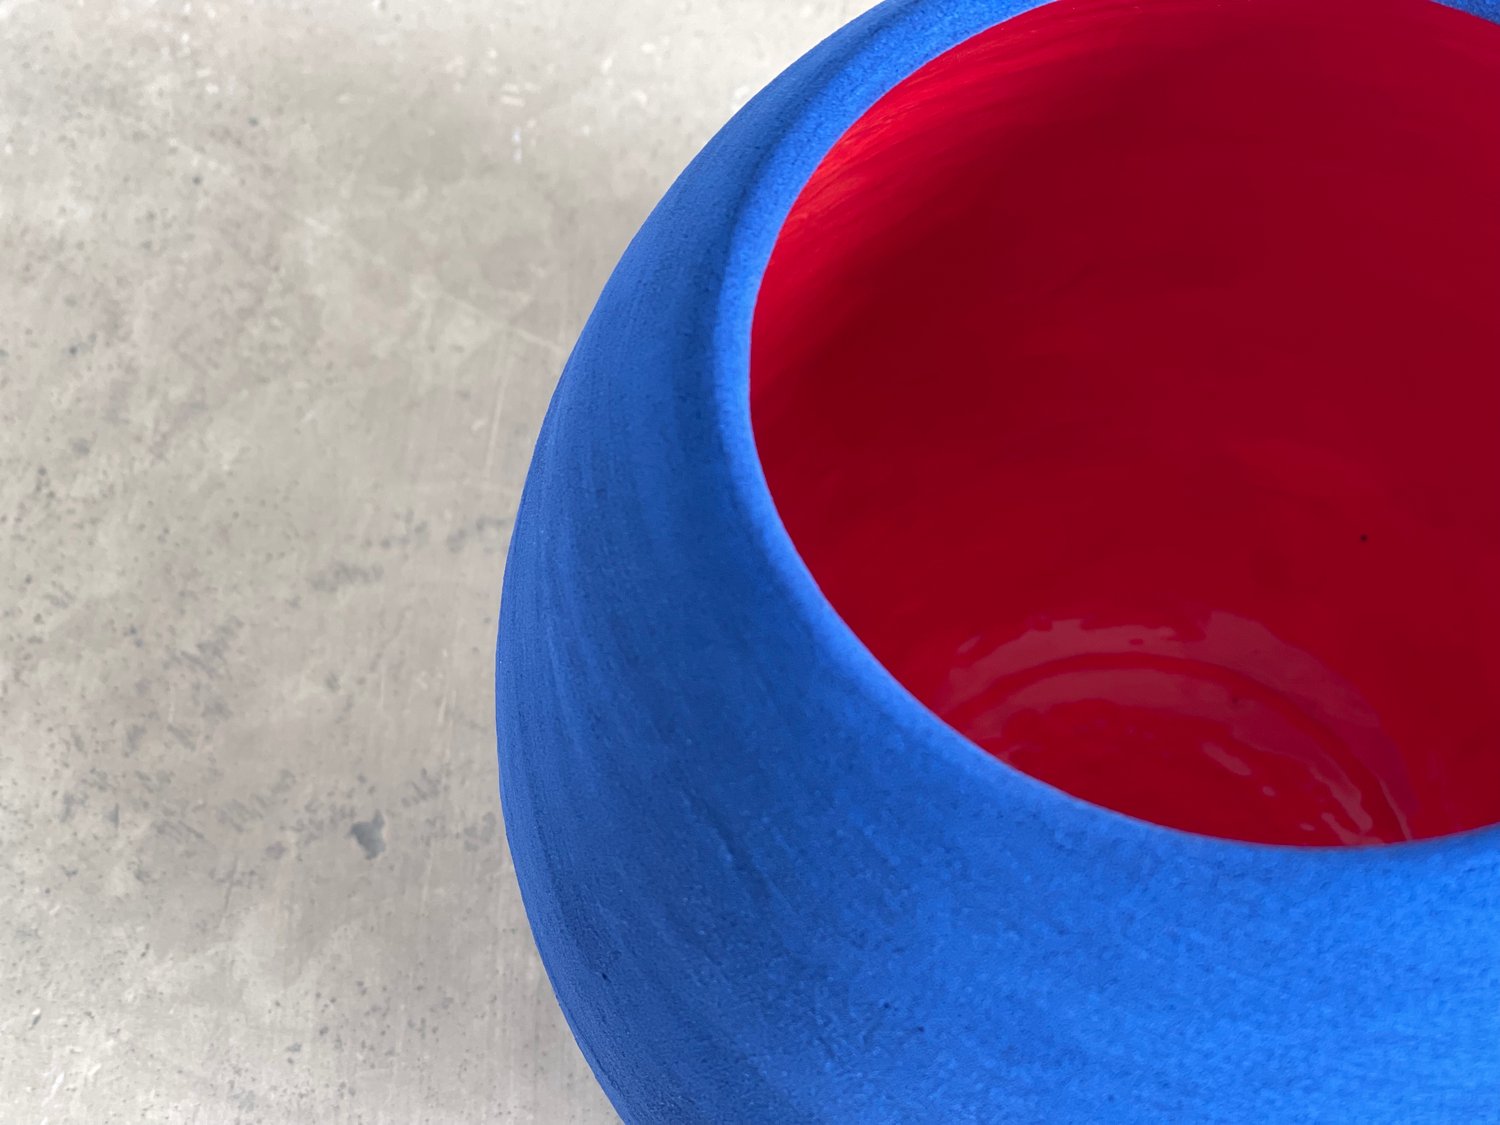 Image of Blue & Red Dino Vase